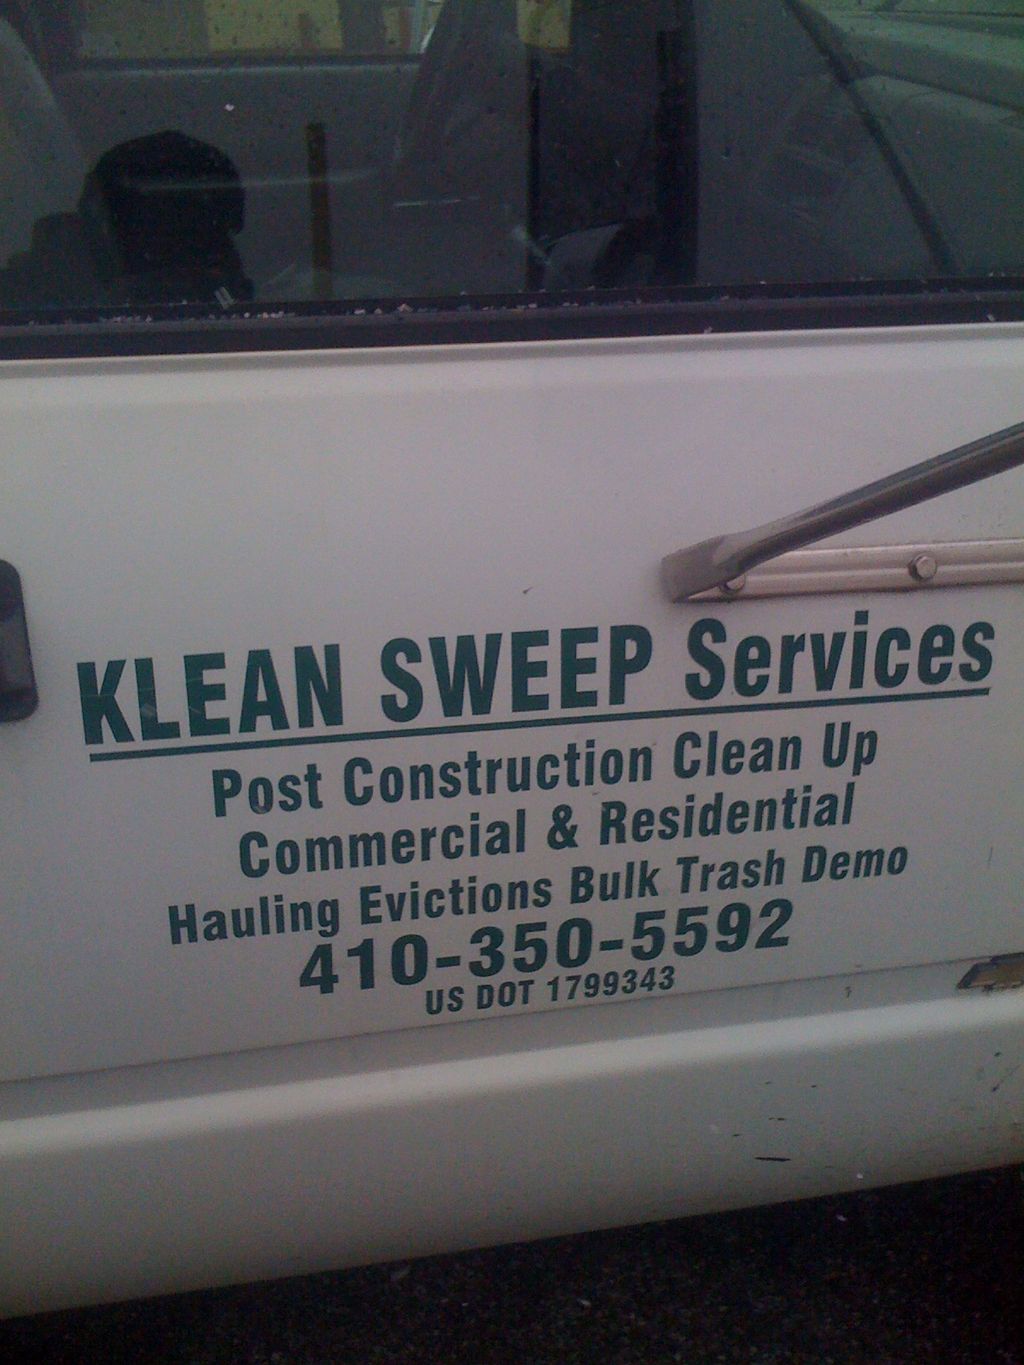 Klean Sweep Services